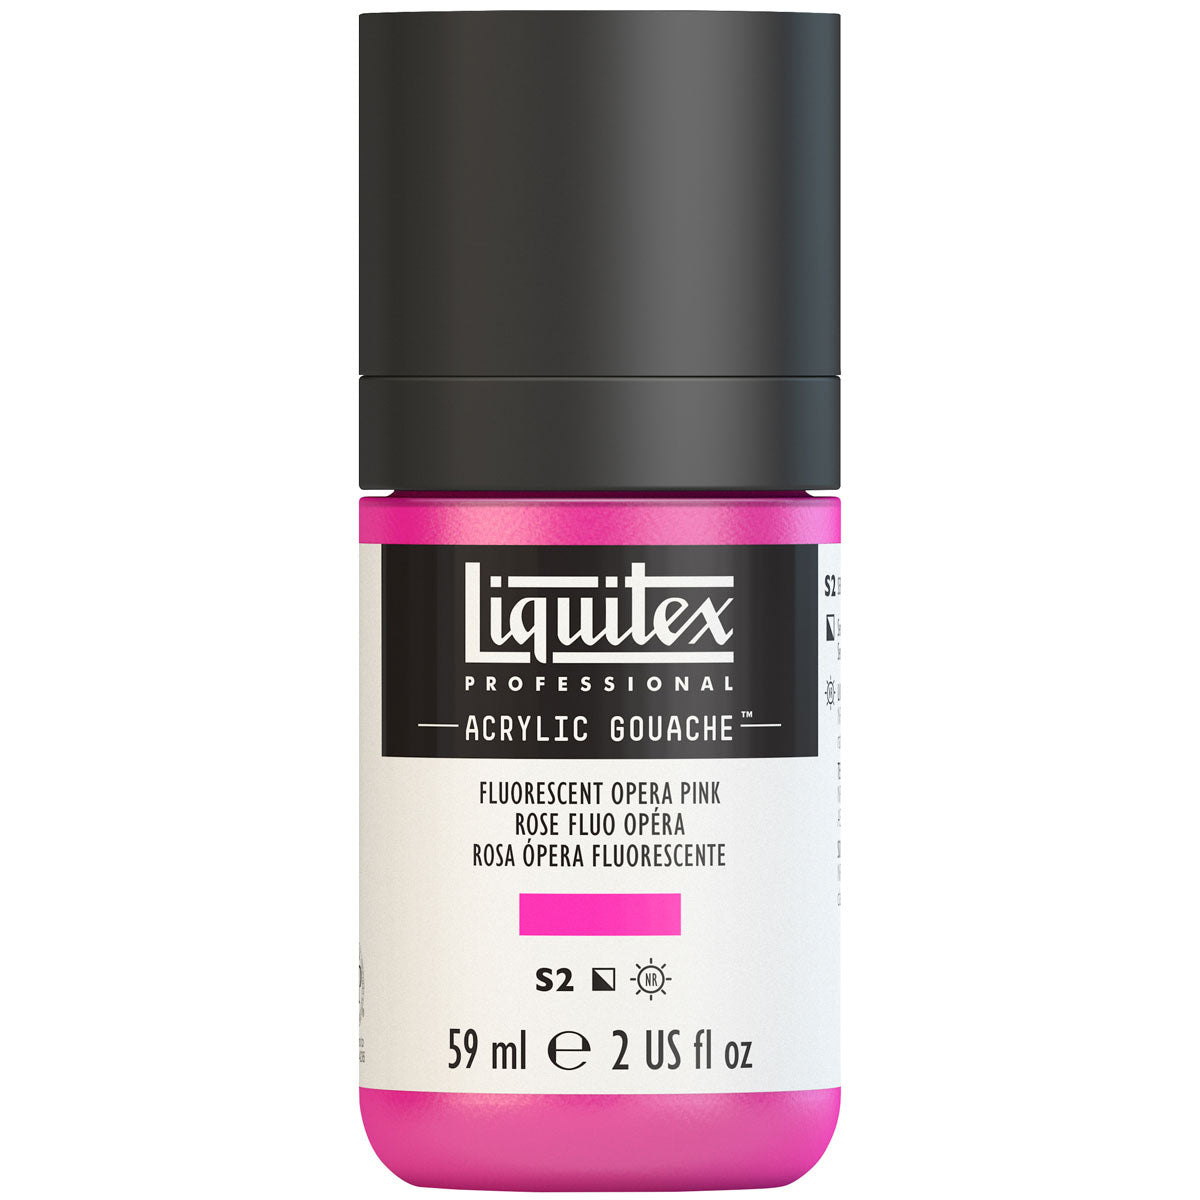 Liquitex - Acrylic Gouache 59ml S2 - Fluorescent Opera Pink